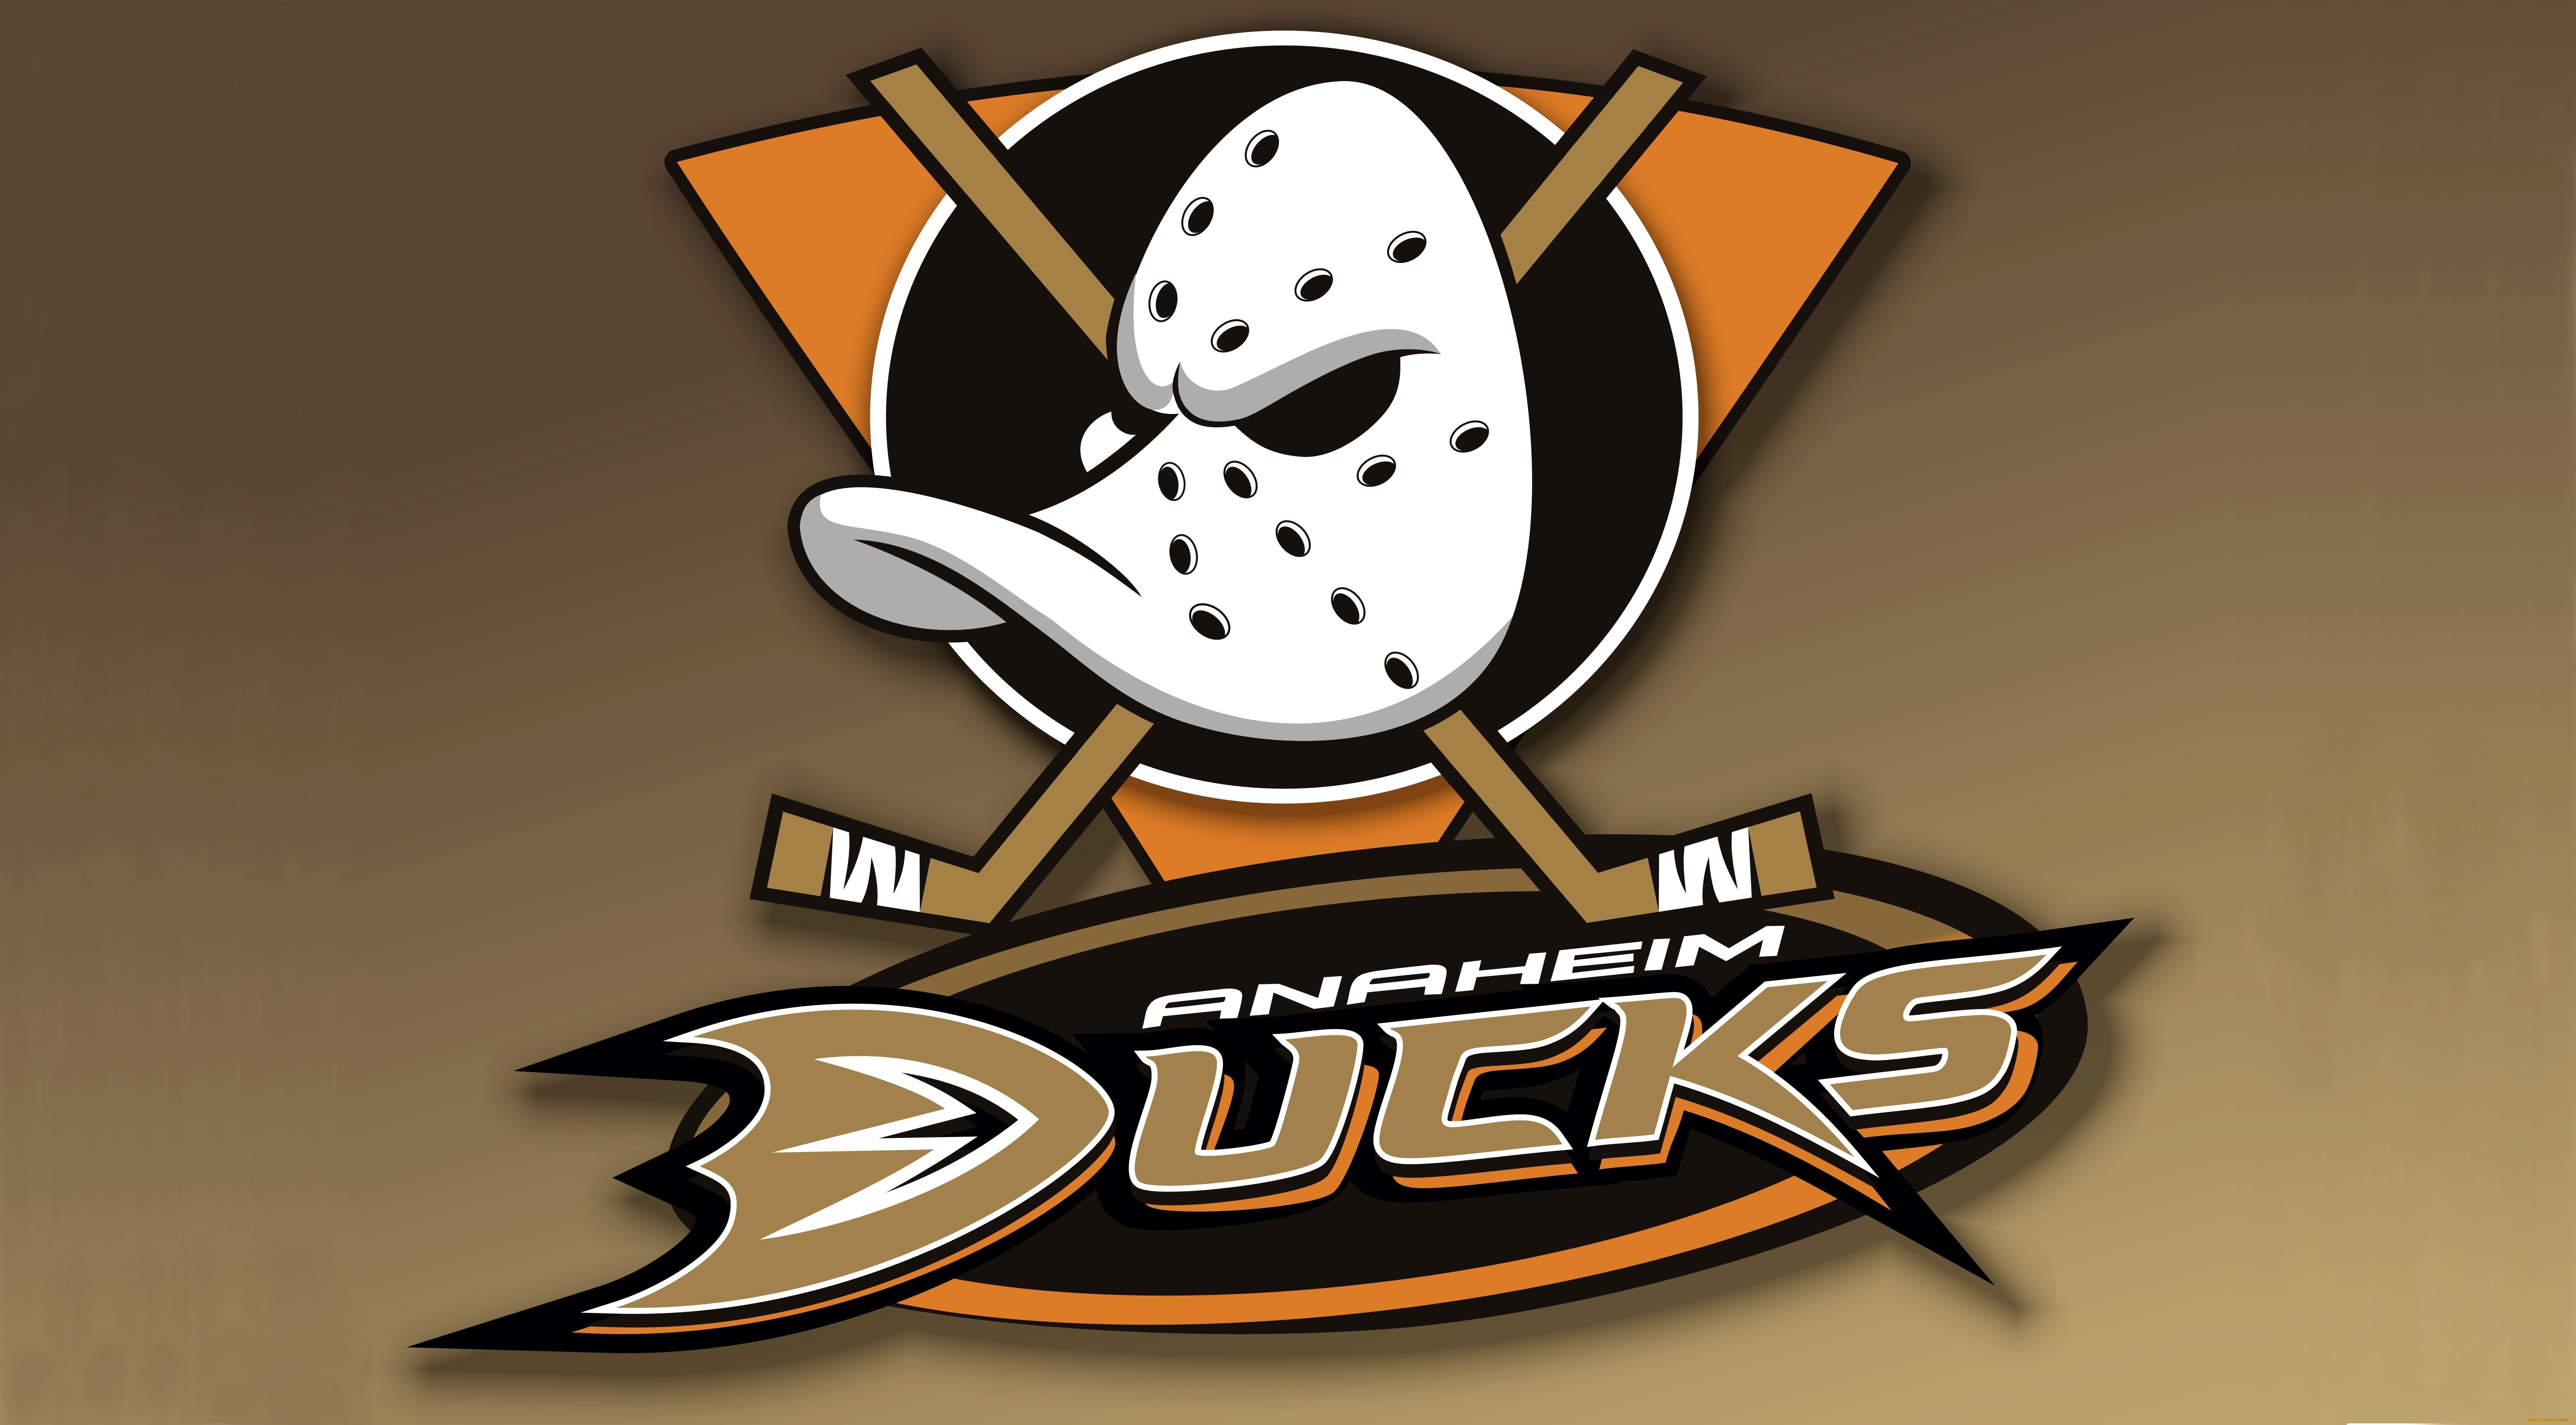 Картинки хоккейных команд. Хоккейная команда NHL логотипы. Хоккейная команда Анахайм Дакс. Команда Anaheim Ducks хоккейная. Команда НХЛ Дакс.